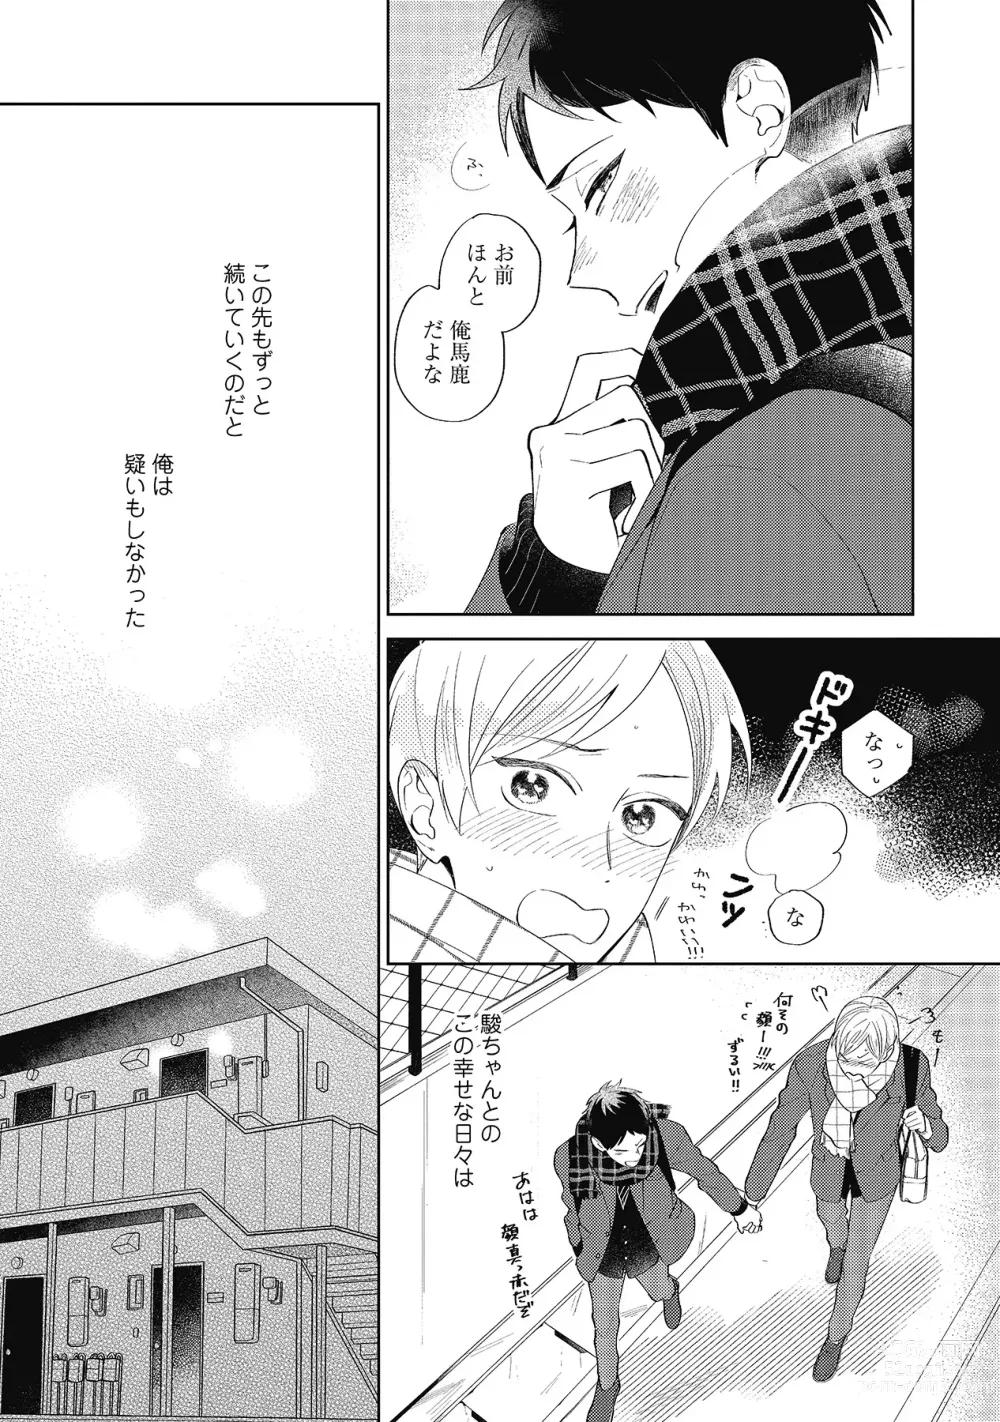 Page 7 of manga Sentimental Darling